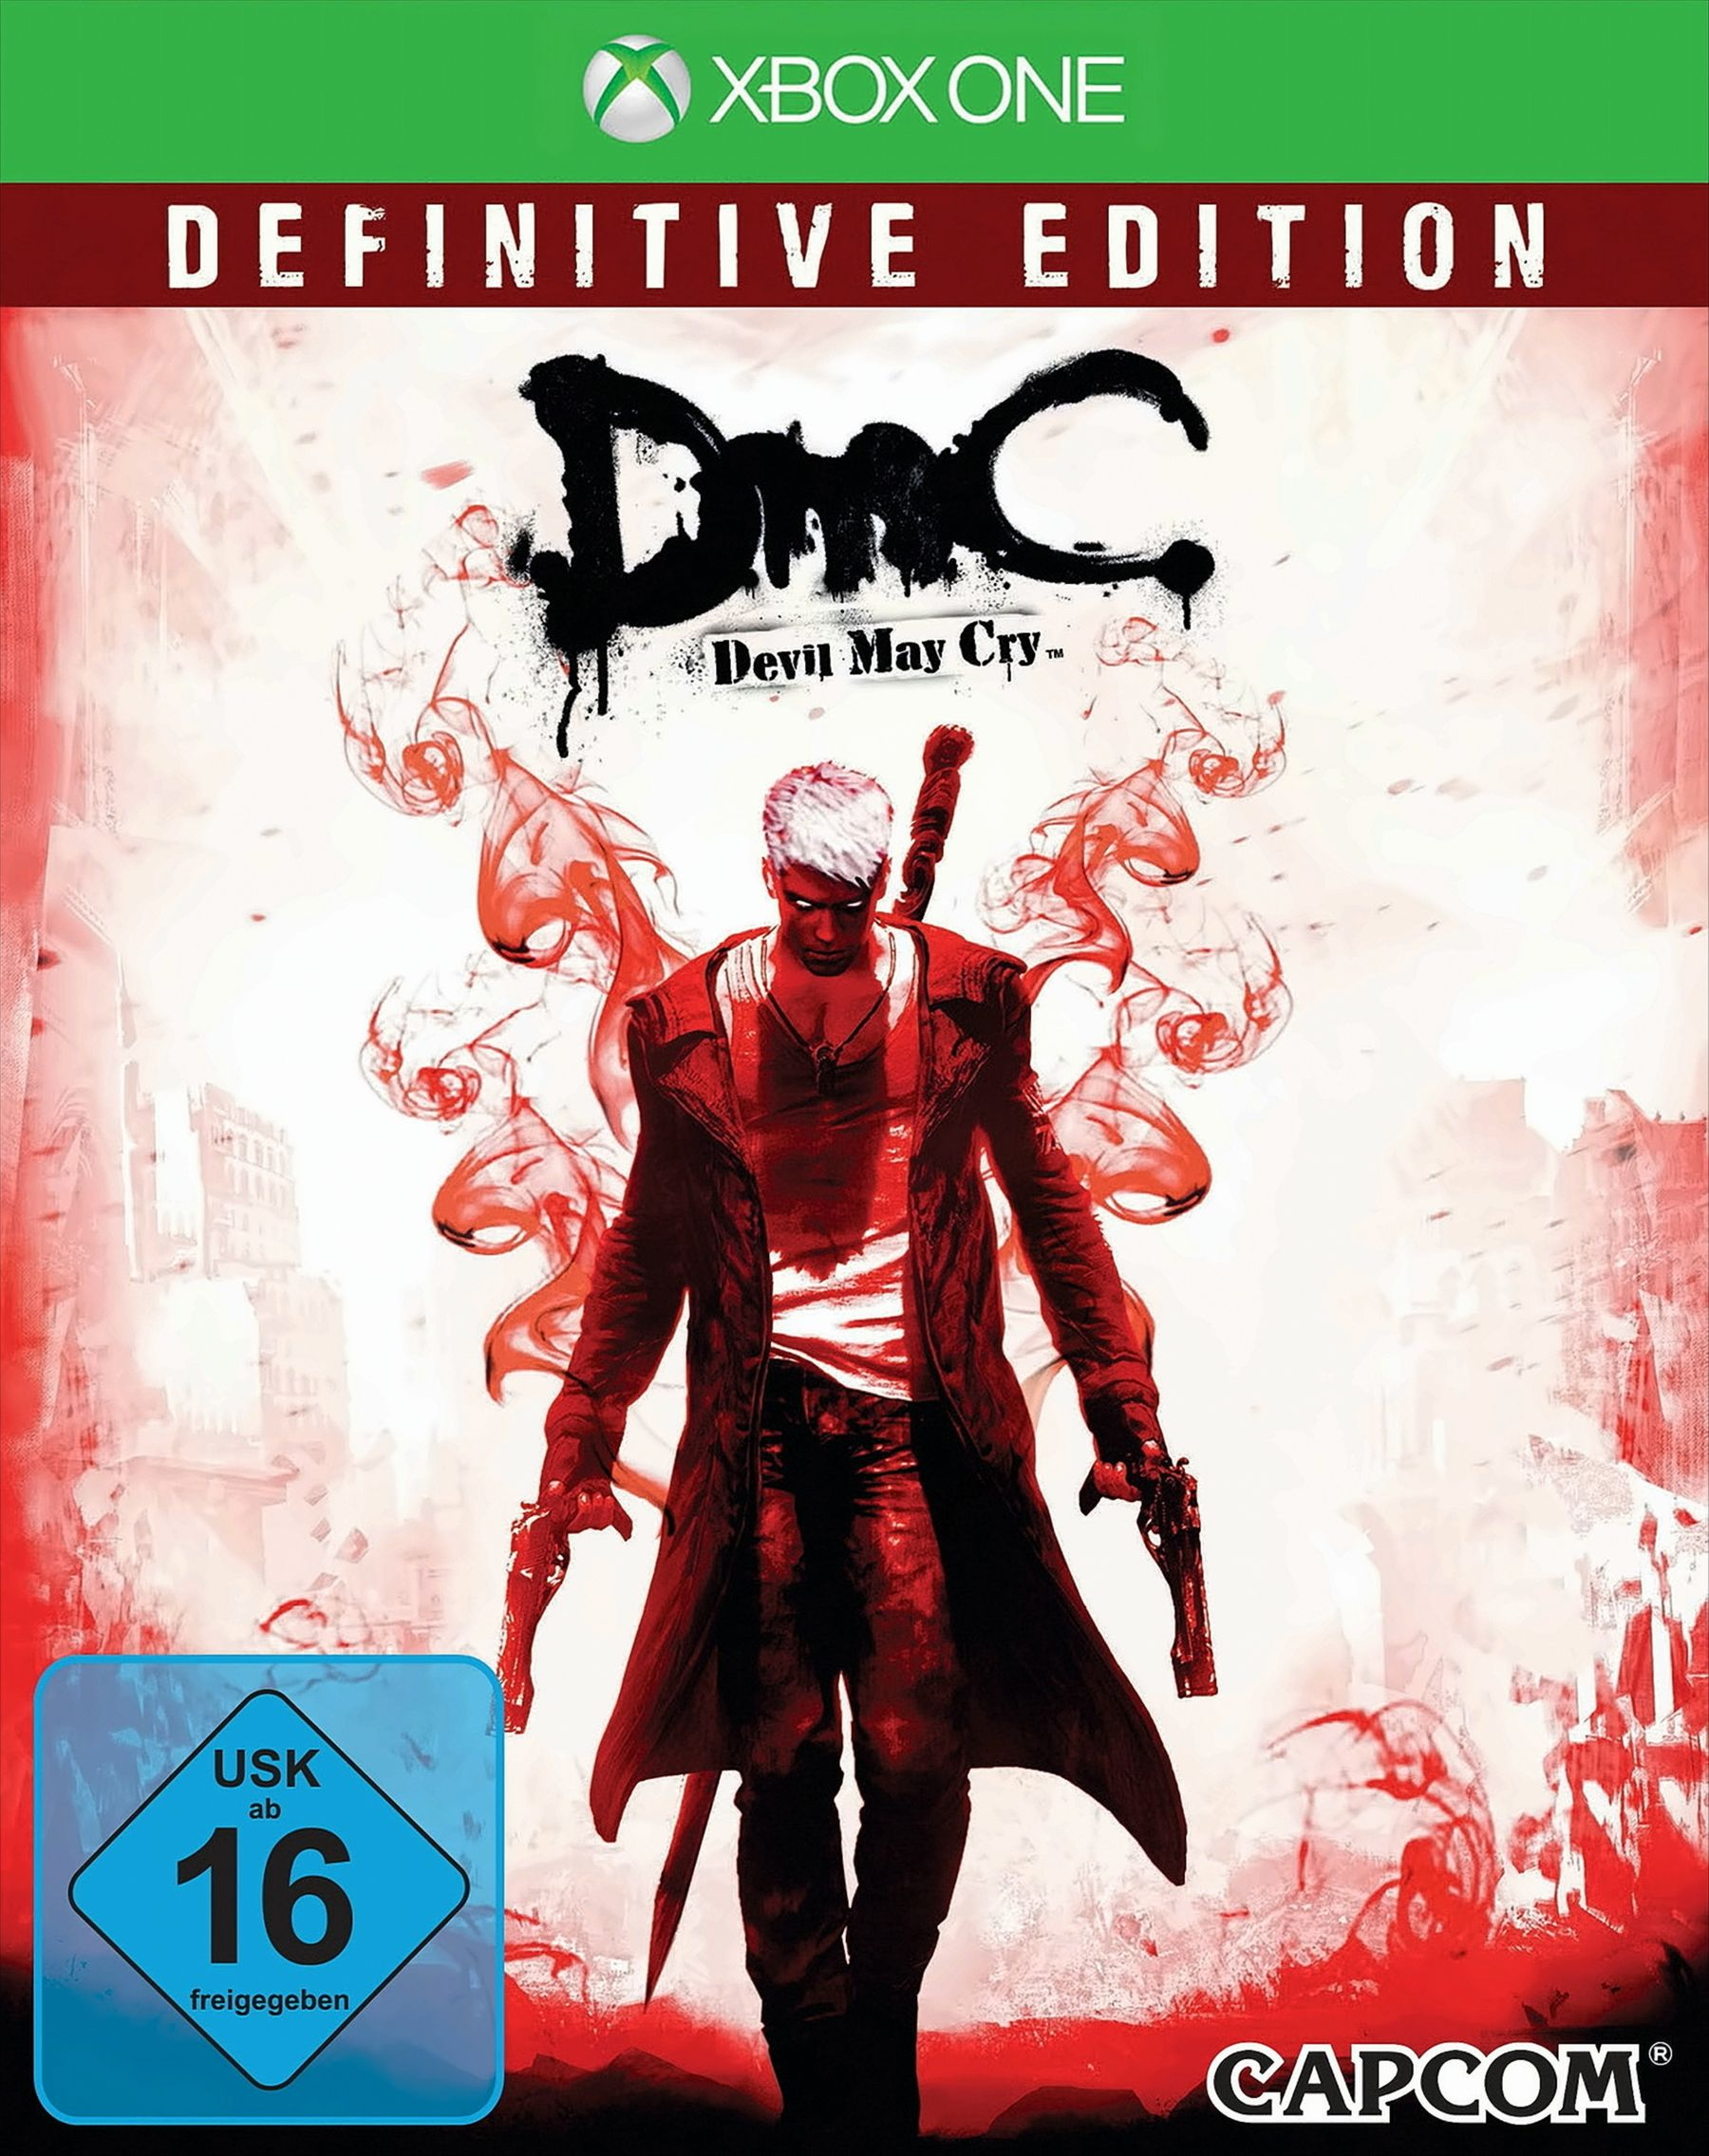 May Cry Devil - Edition) One] (Definitive DmC - [Xbox